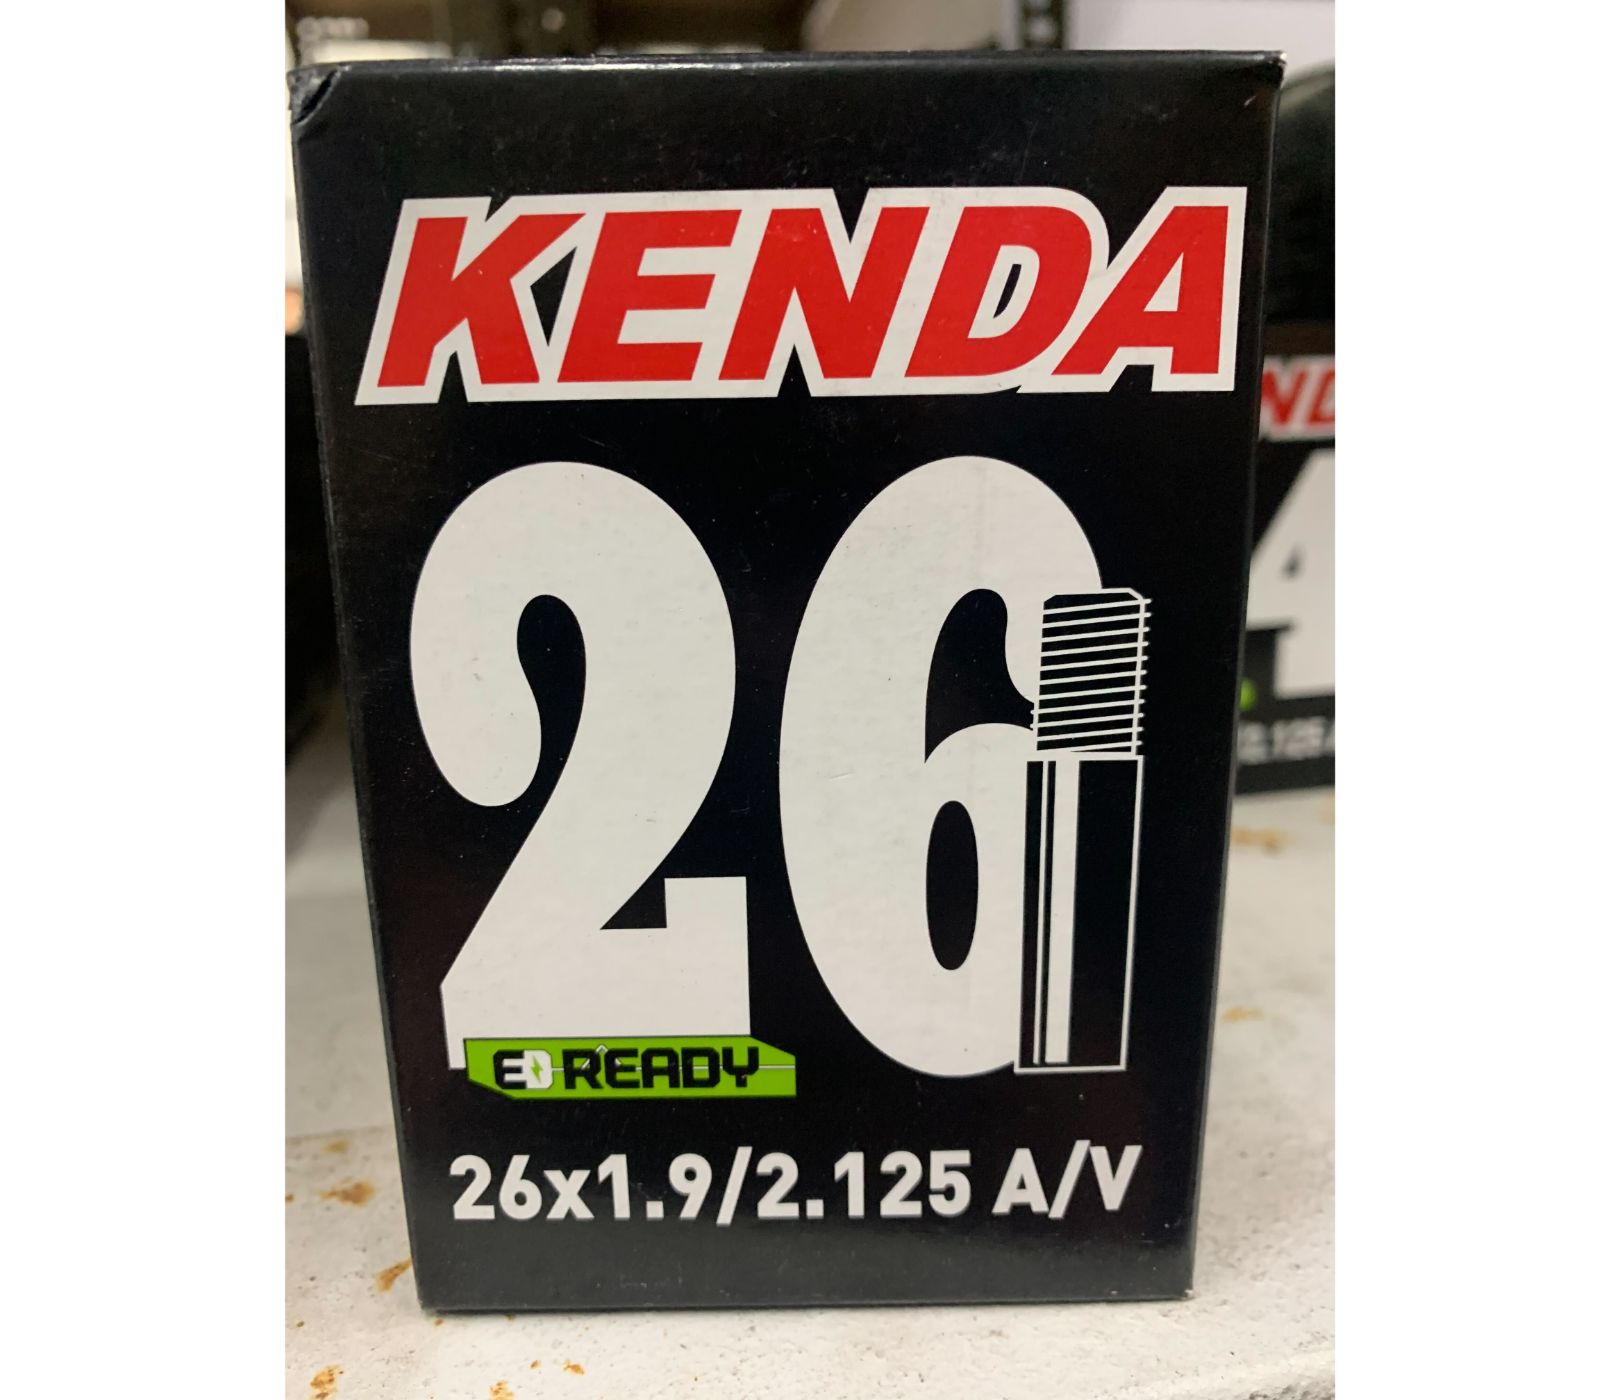 Kenda 26X1.9/2.125 36mm A/V MTB Tube